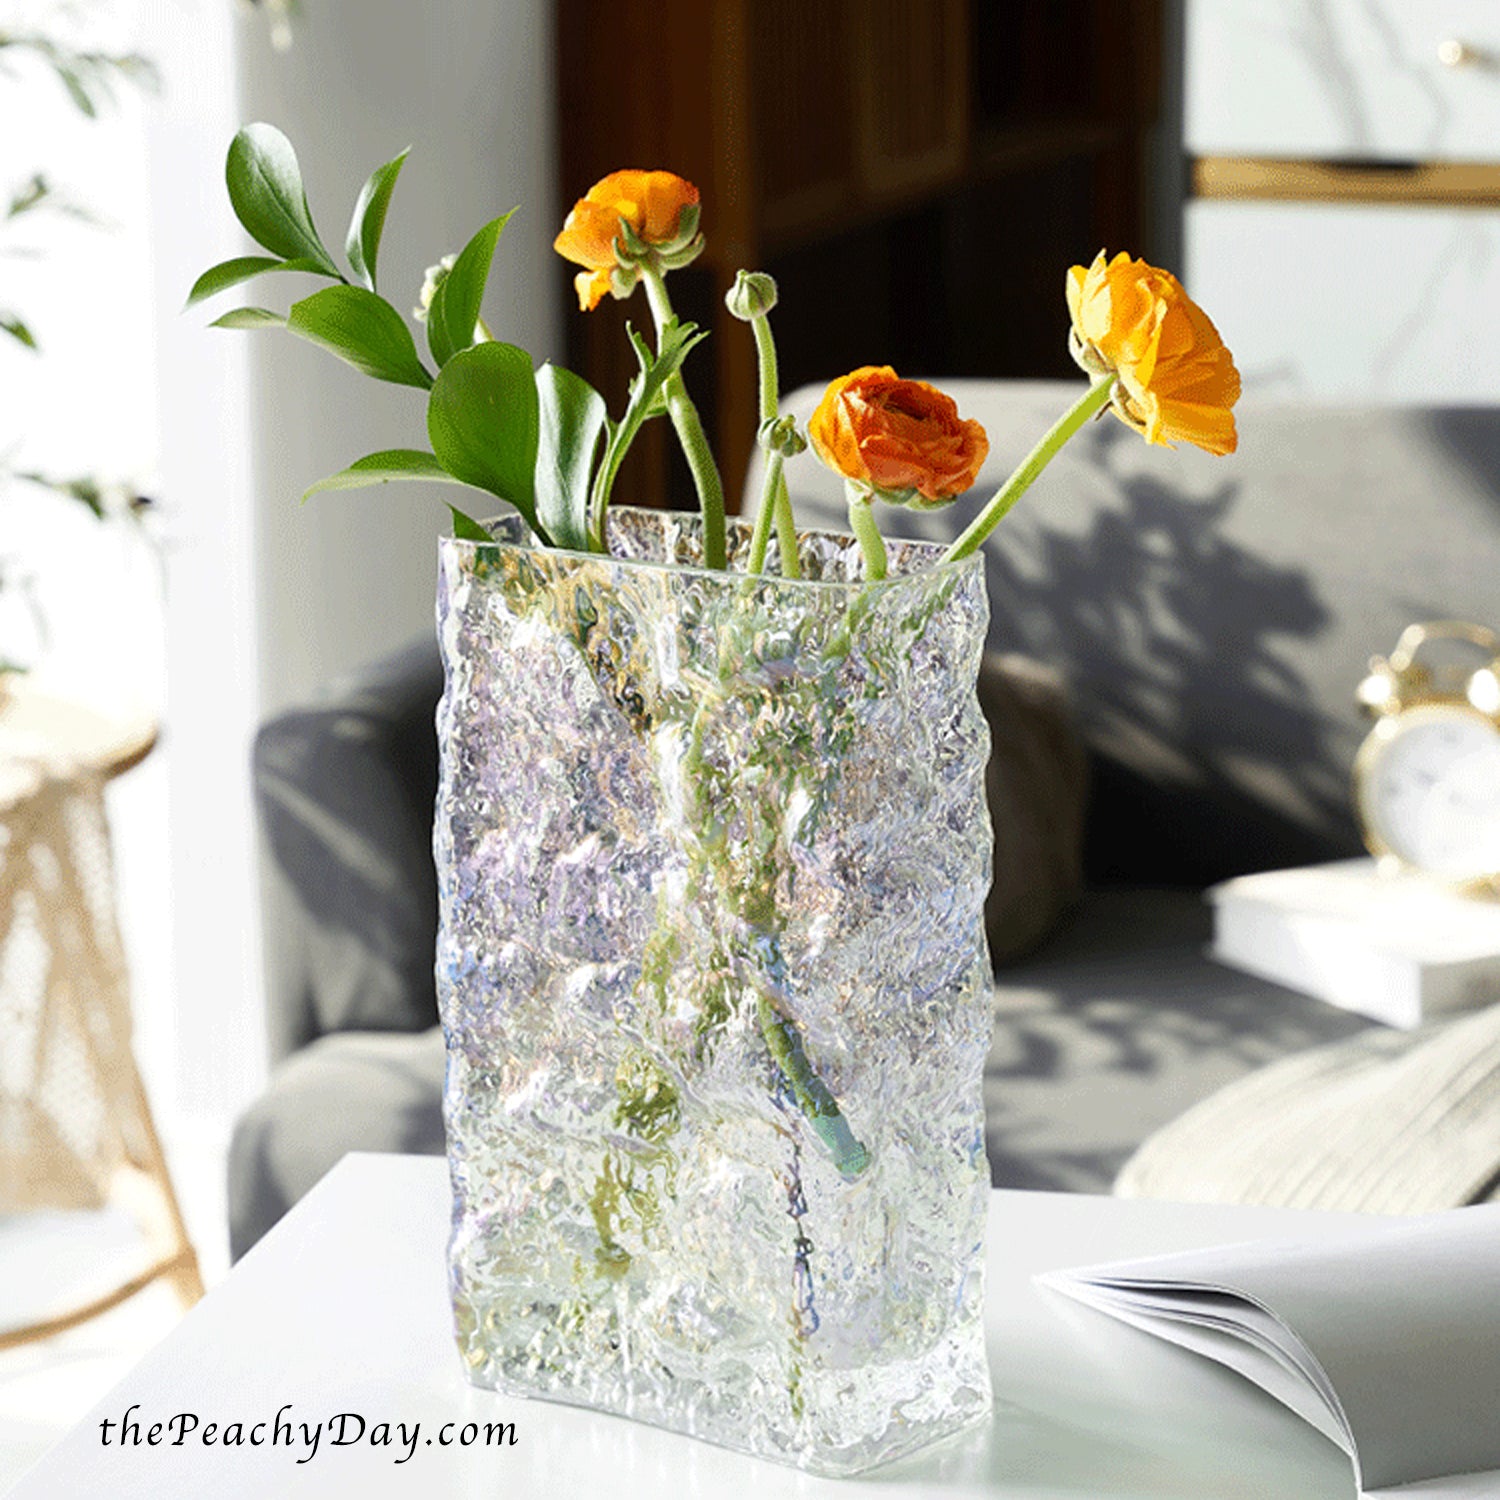 iridescent clear glass vases decorative rectangular vase glass modern textured vase rose vase unique trendy vase